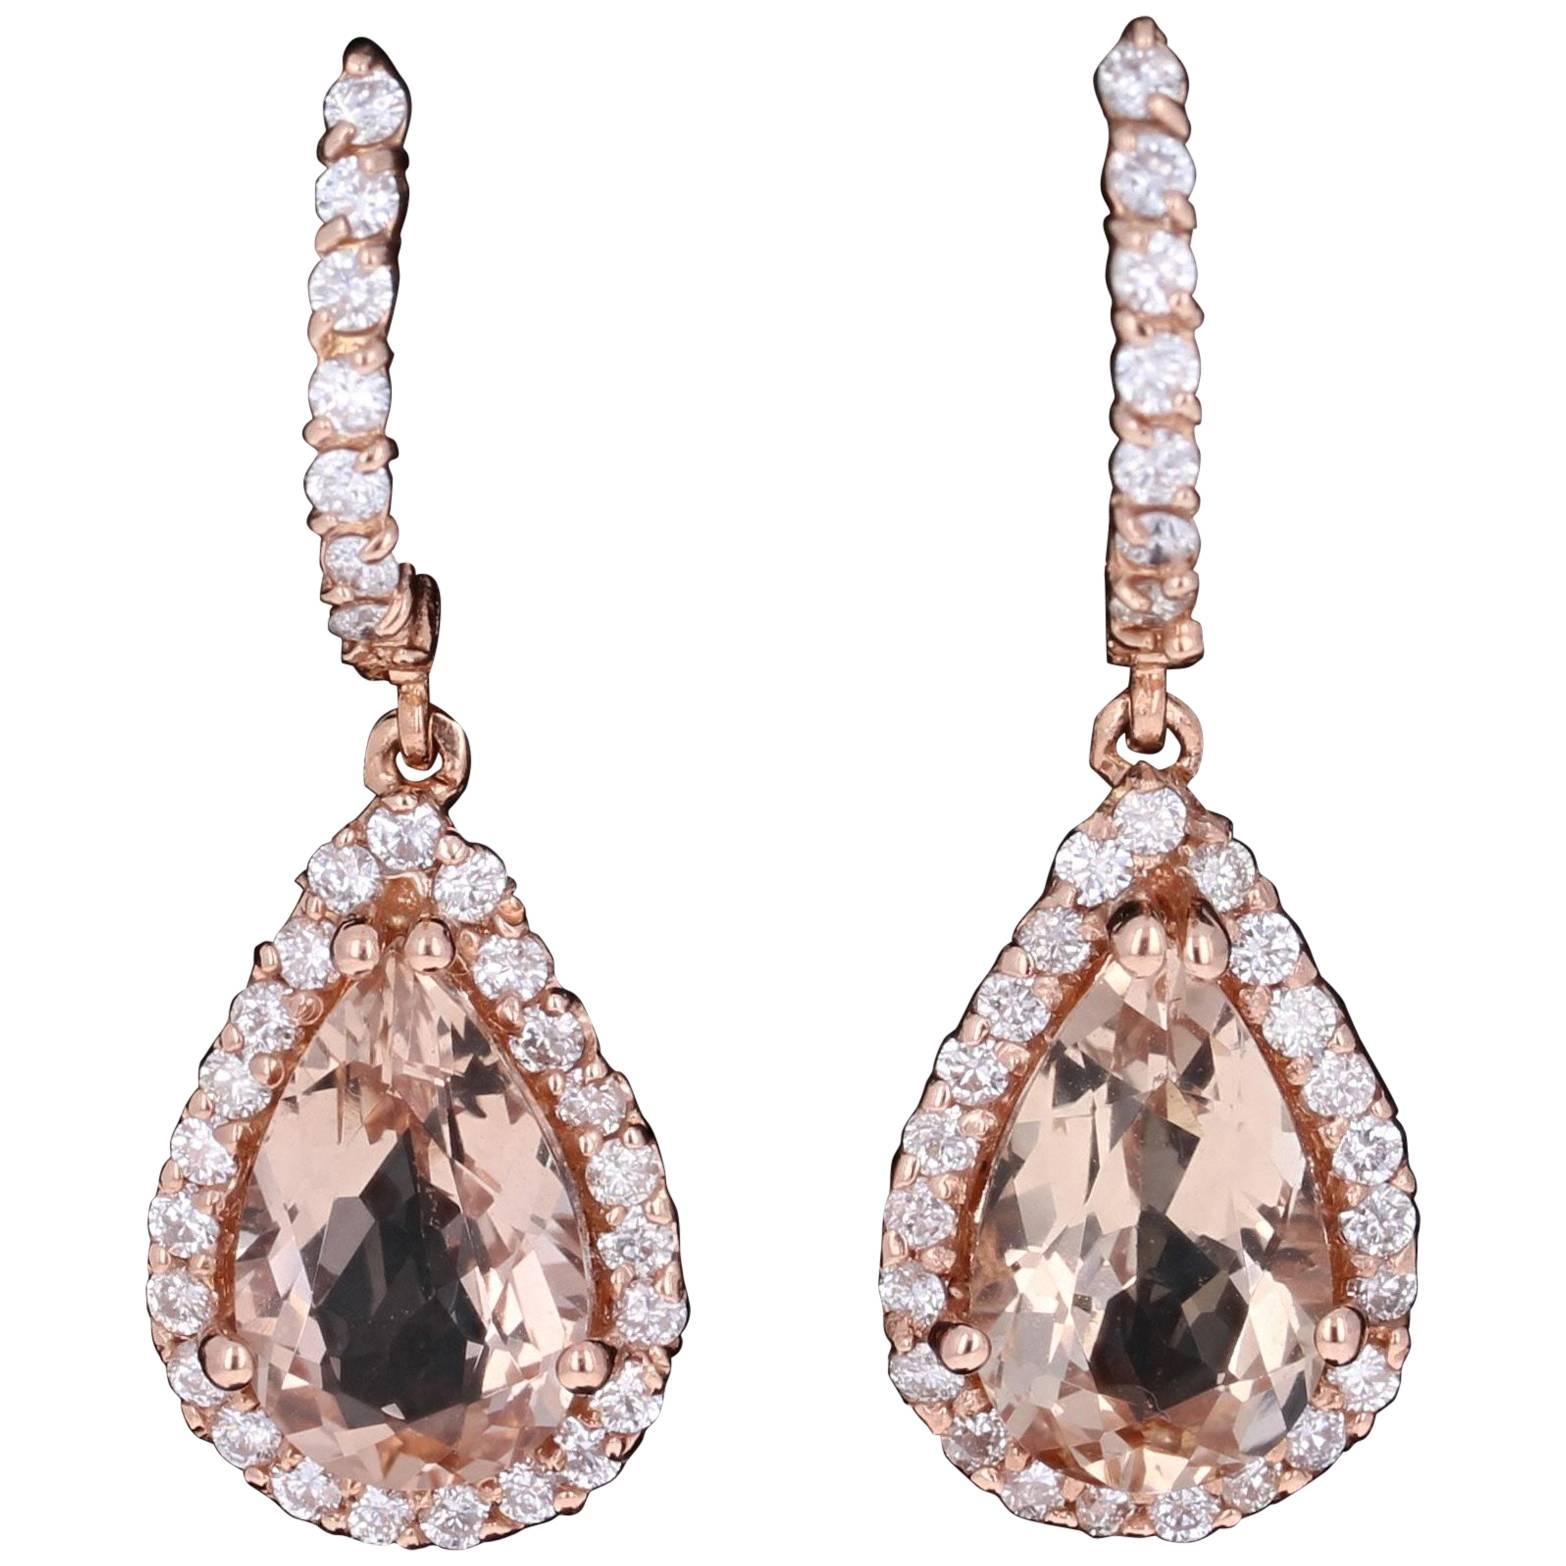 6.28 Carat Morganite Diamond Drop Rose Gold Earrings